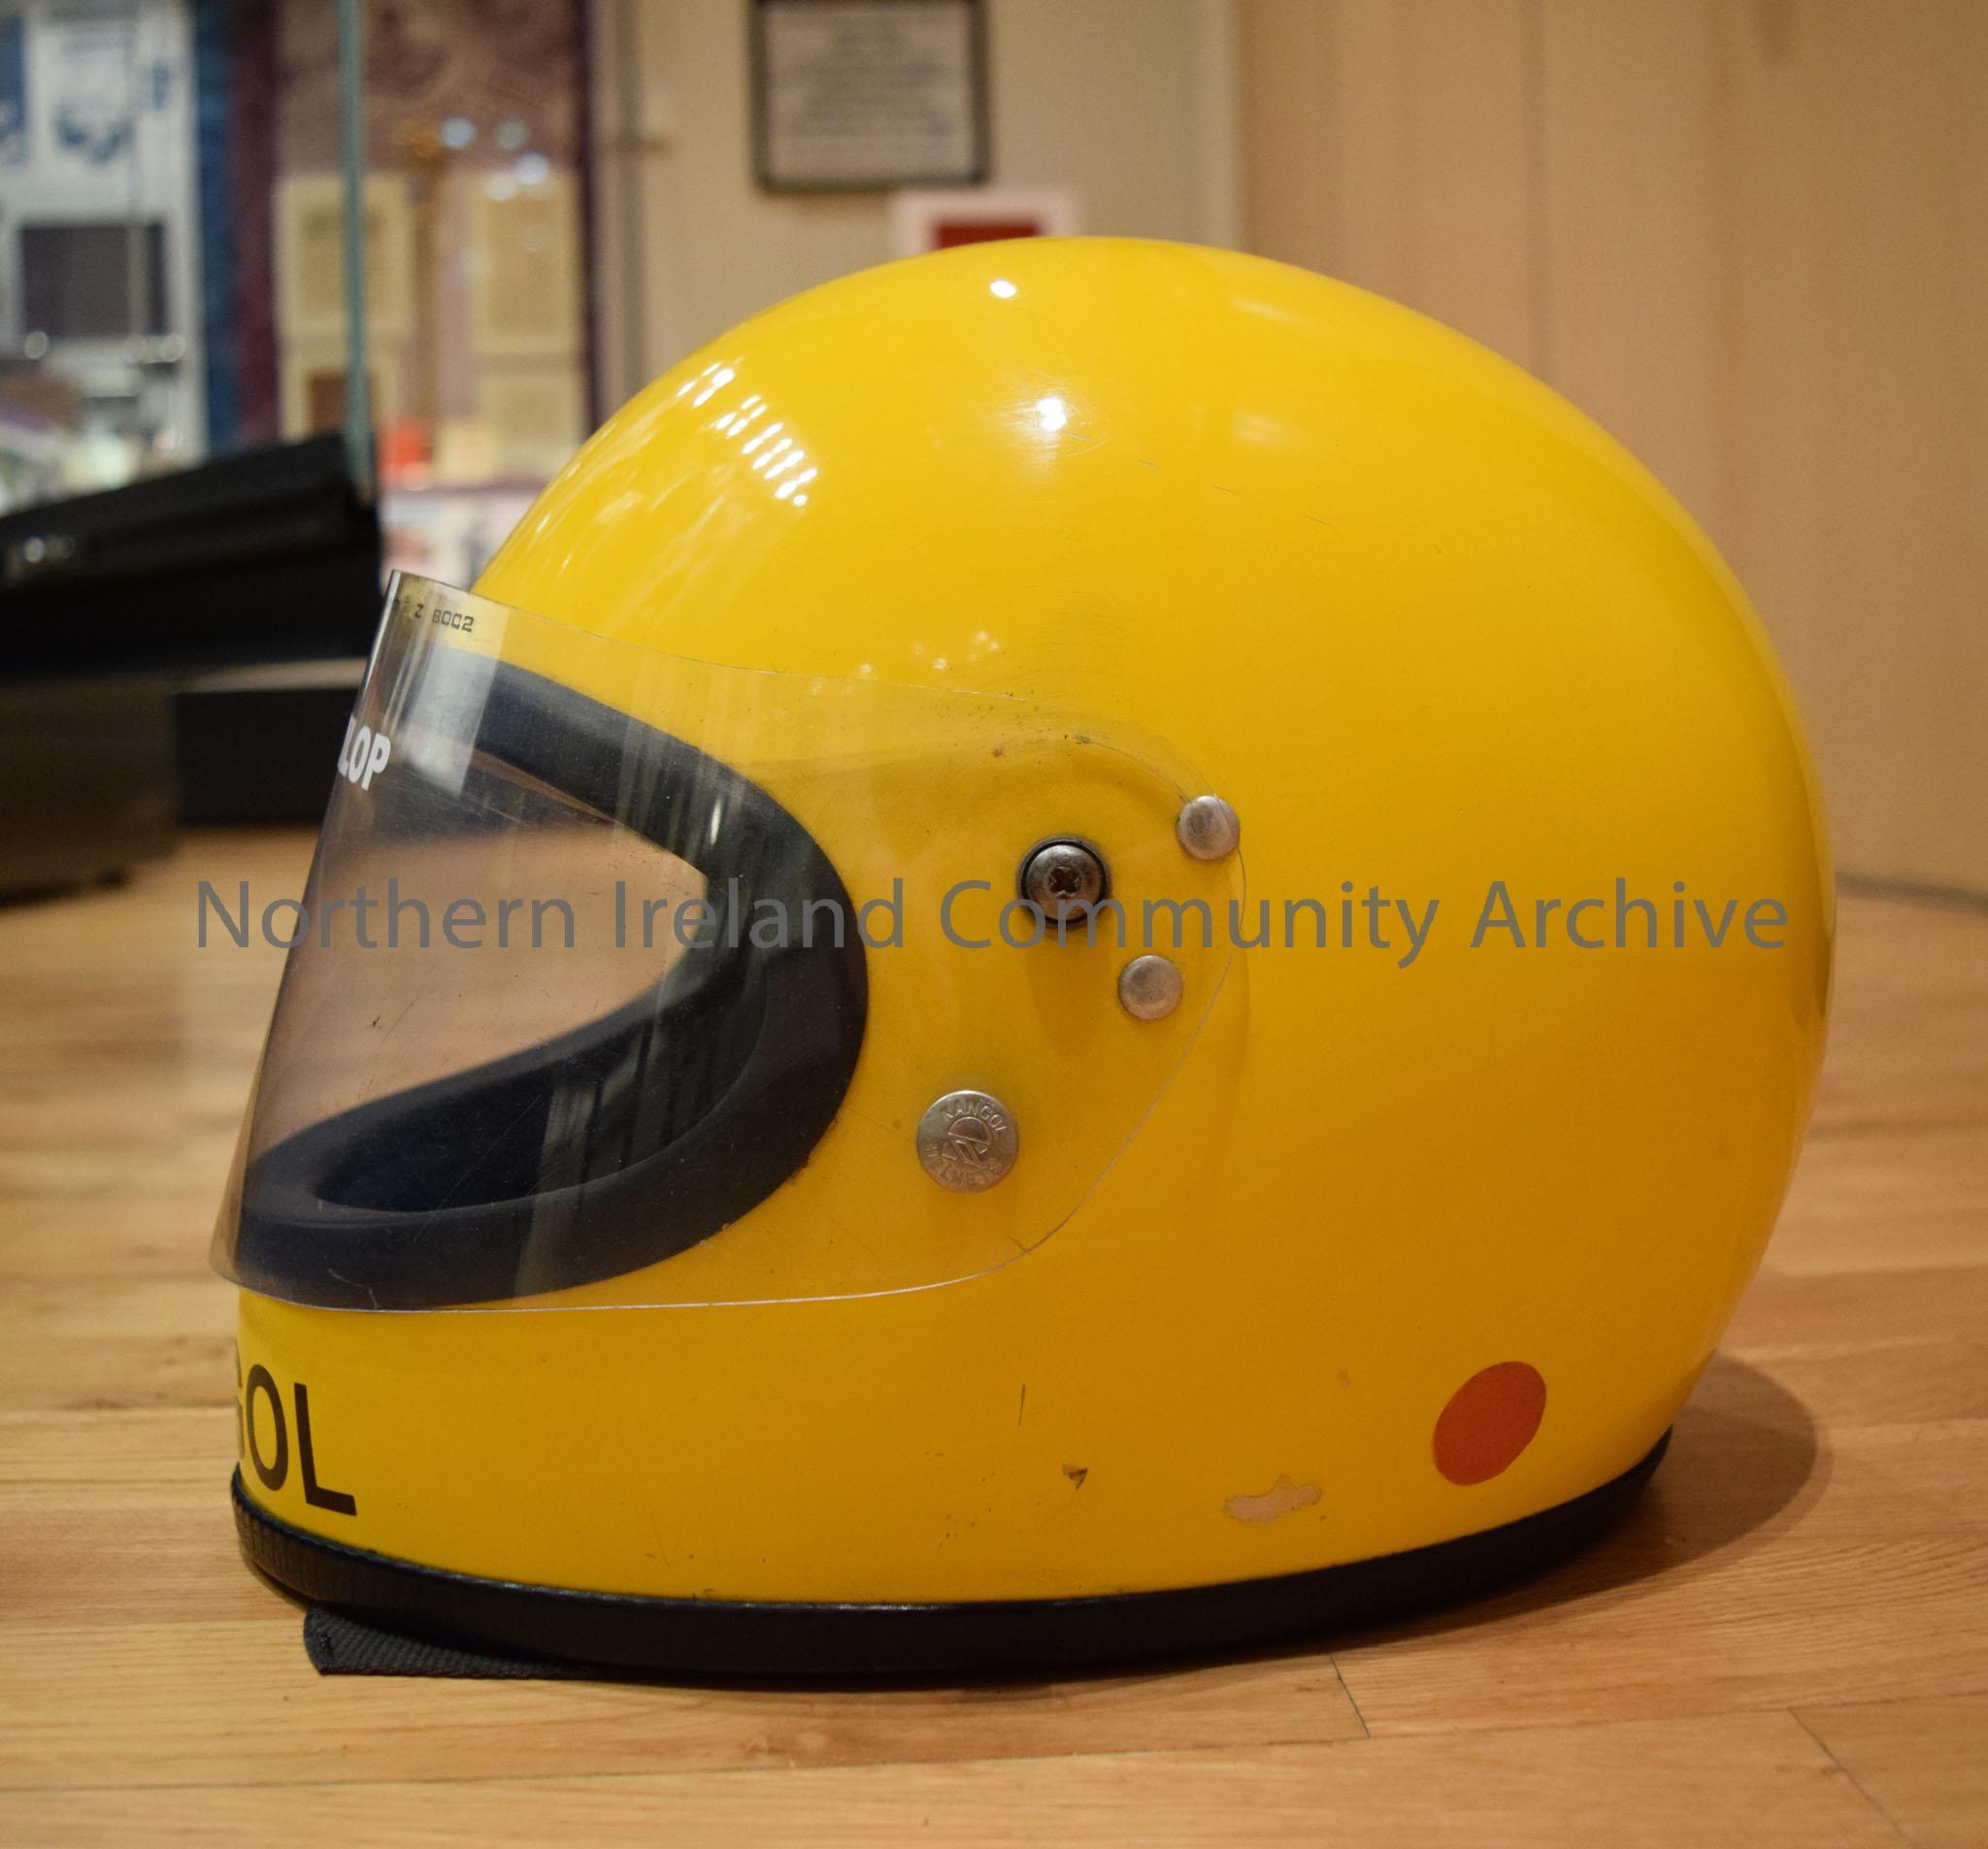 Kangol motorcycle helmet belonging to Joey Dunlop. Matt yellow helmet with a black strip down the middle. – 2016.106 (3)